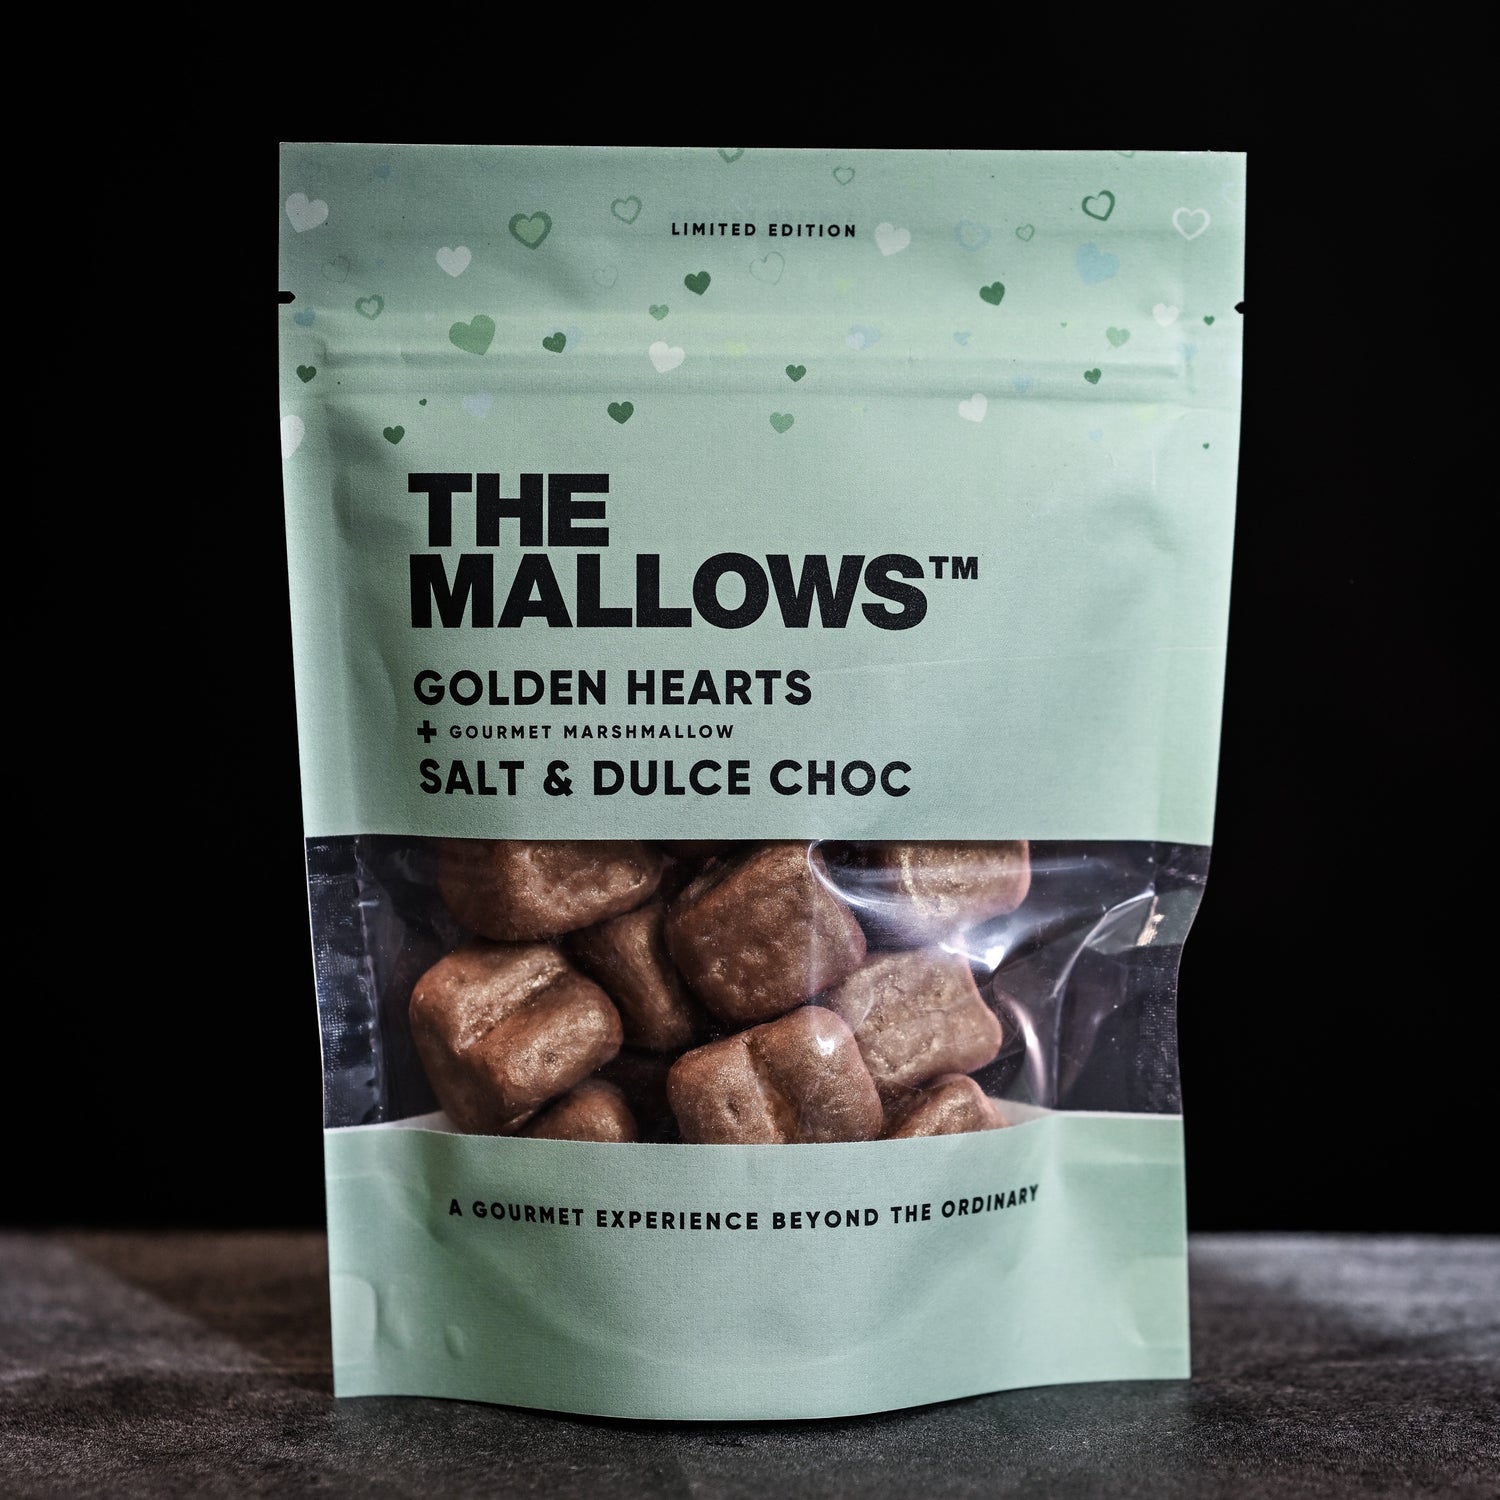 The Mallows Golden Hearts